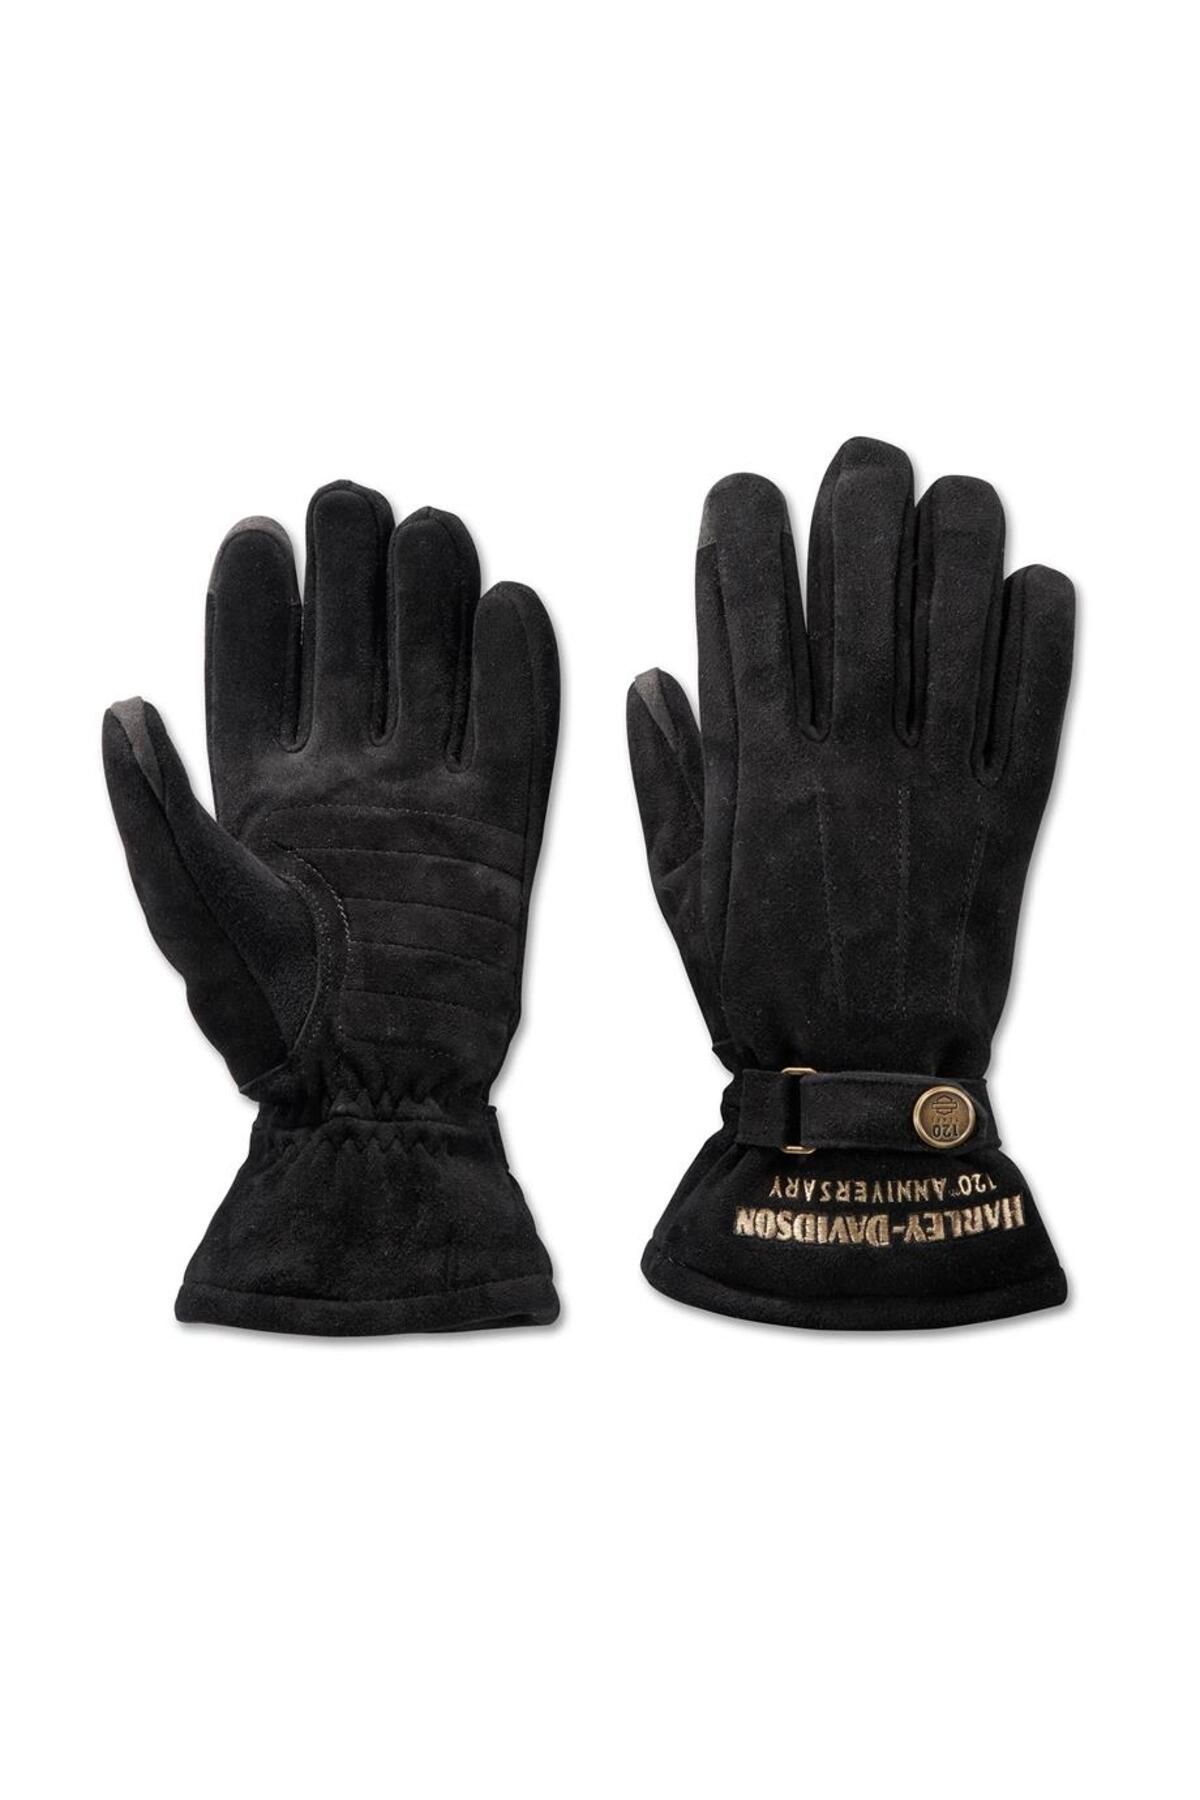 Harley Davidson Harley-Davidson Women's 120th Anniversary Wistful Leather Gloves